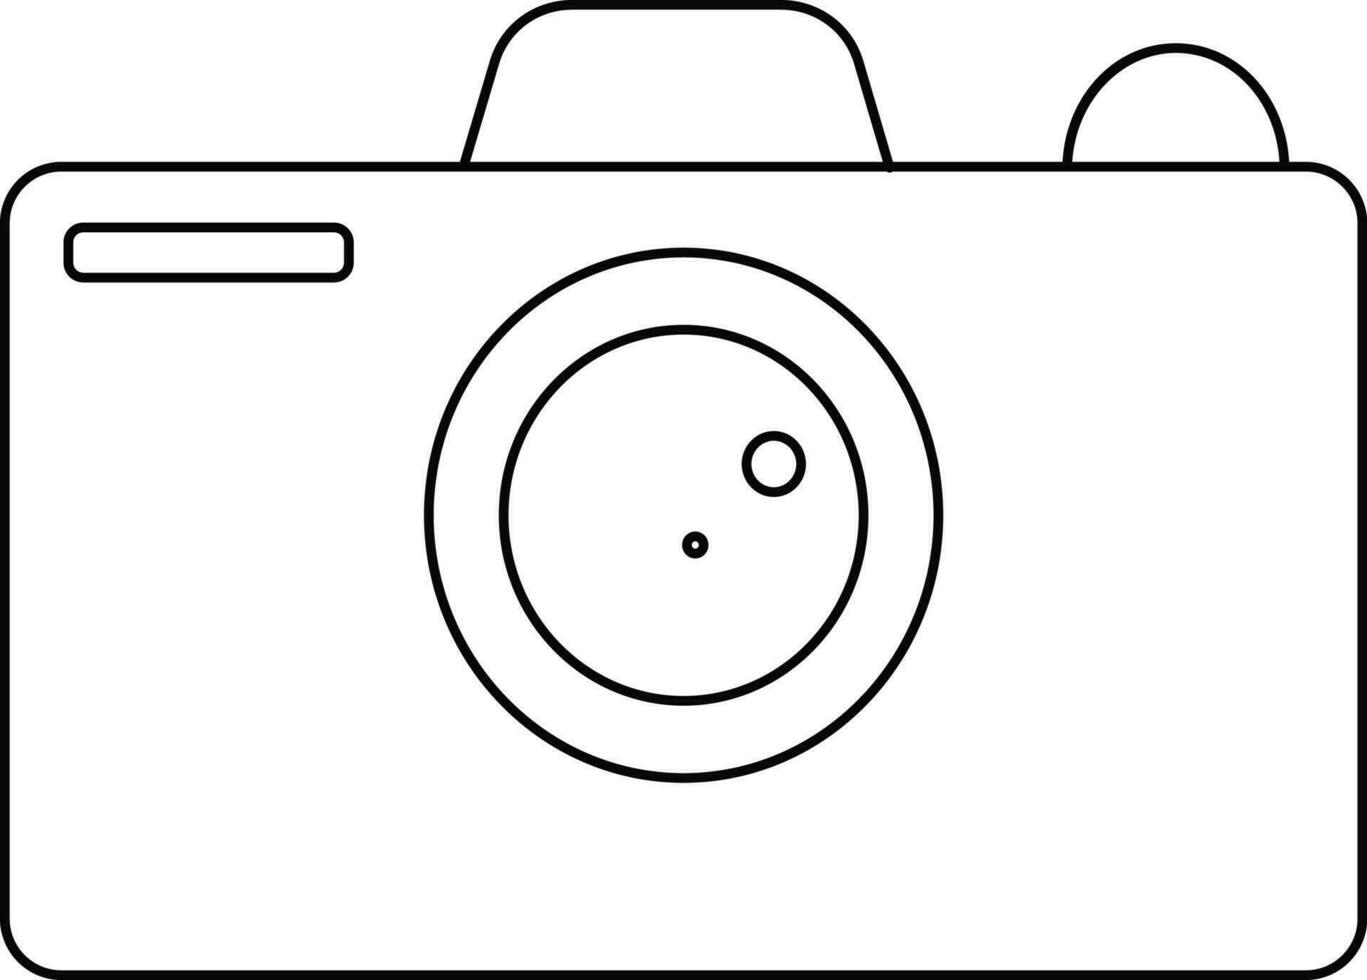 svart linje konst illustration av en kamera ikon. vektor